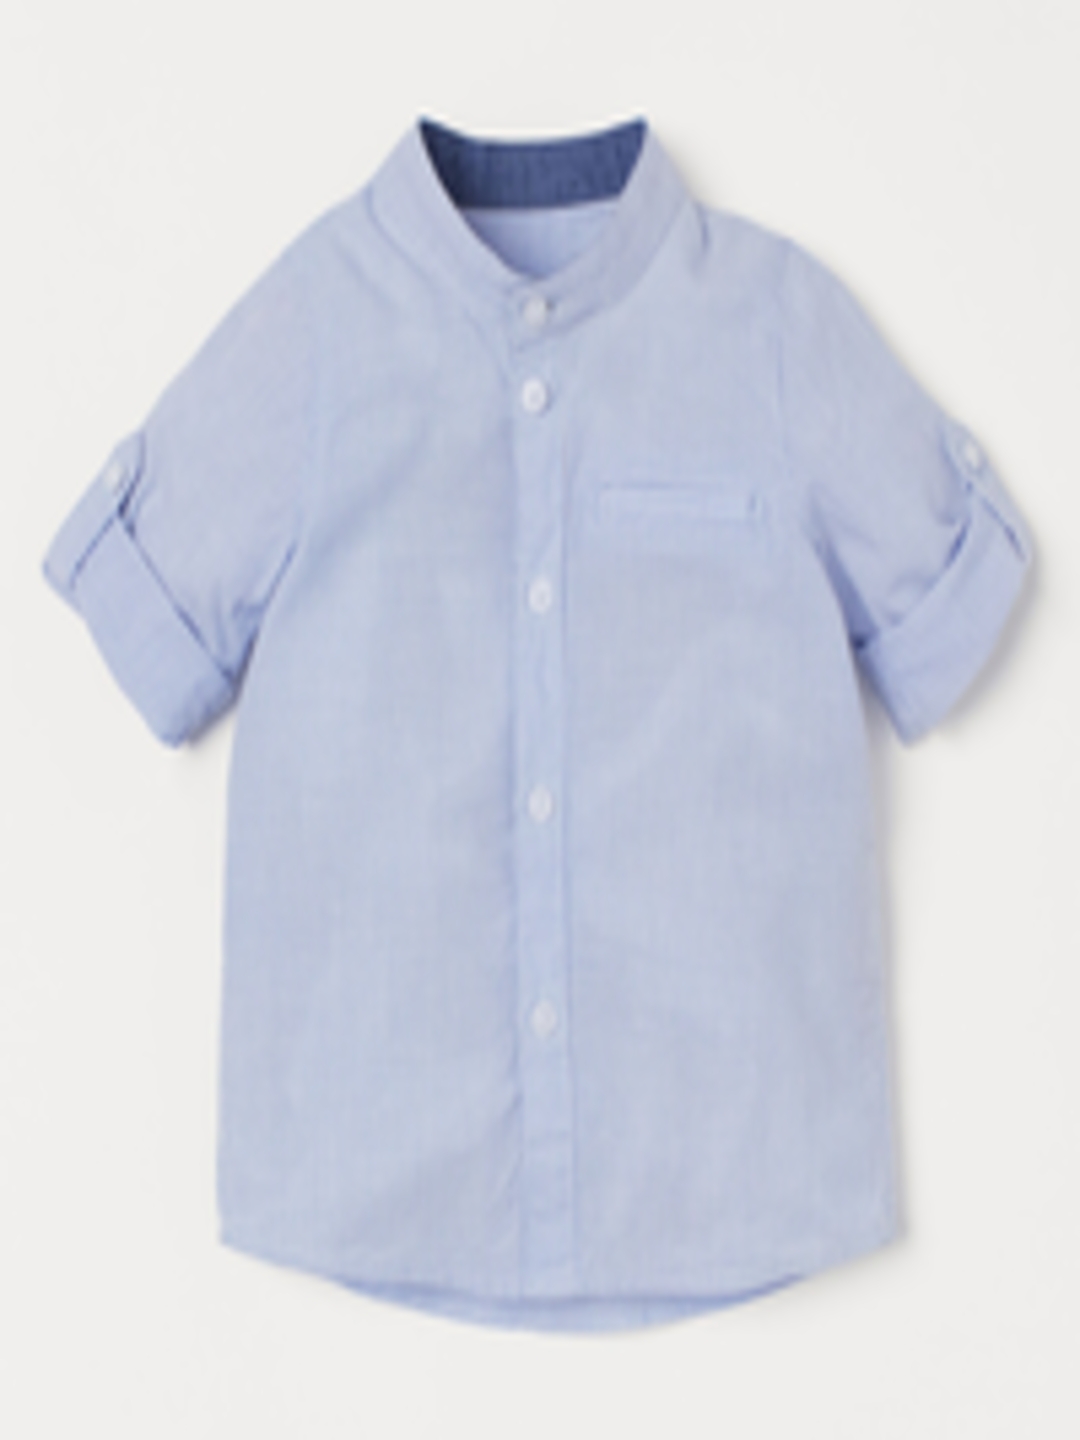 Buy H&M Boys Blue Striped Grandad Shirt - Shirts for Boys 14079844 | Myntra